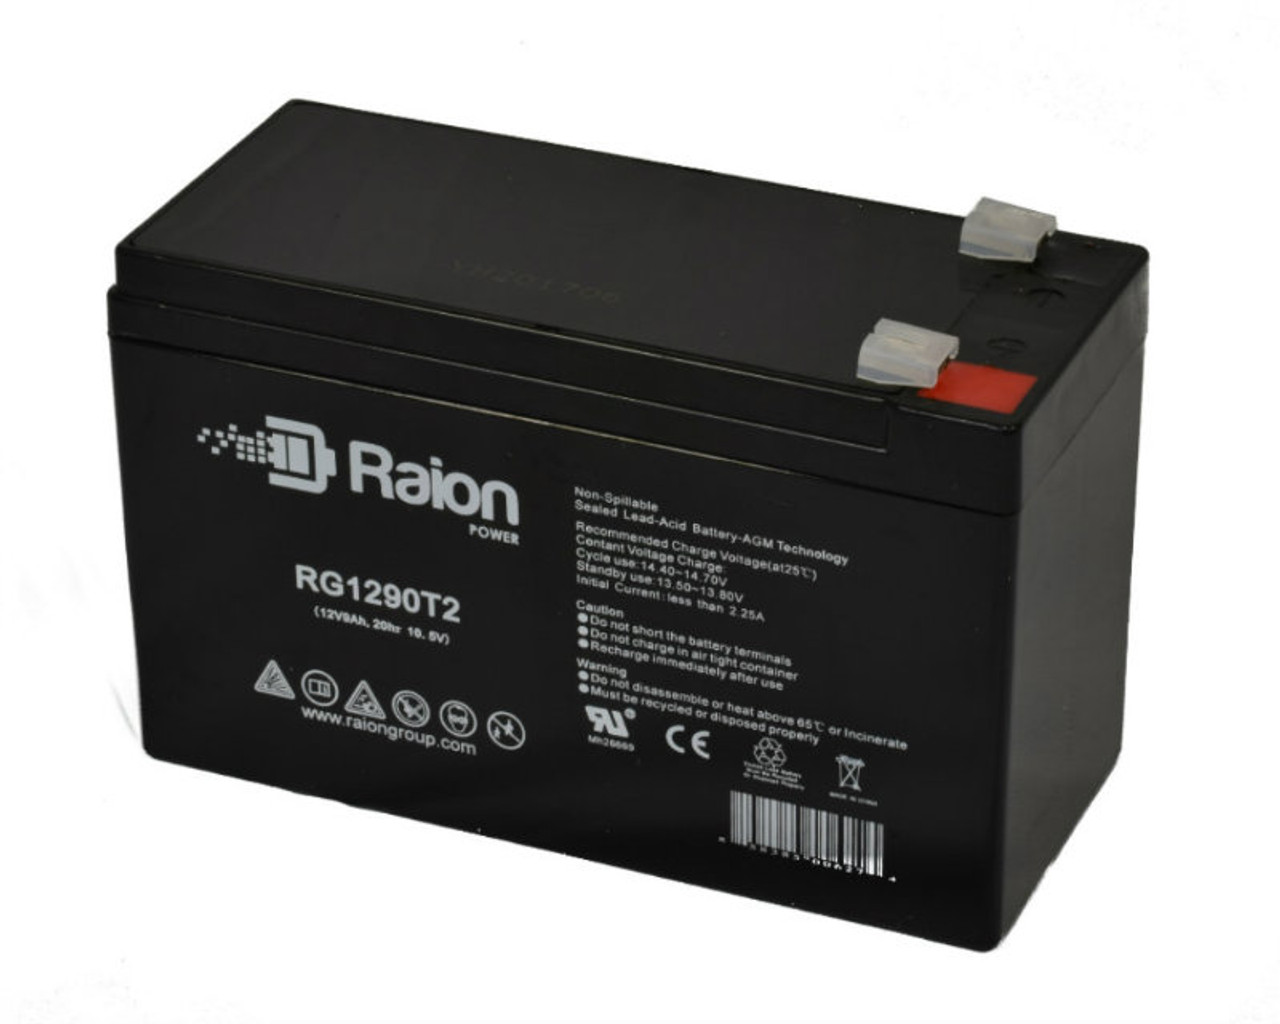 Raion Power RG1290T2 12V 9Ah AGM Battery for Razor Scooter XLR8R